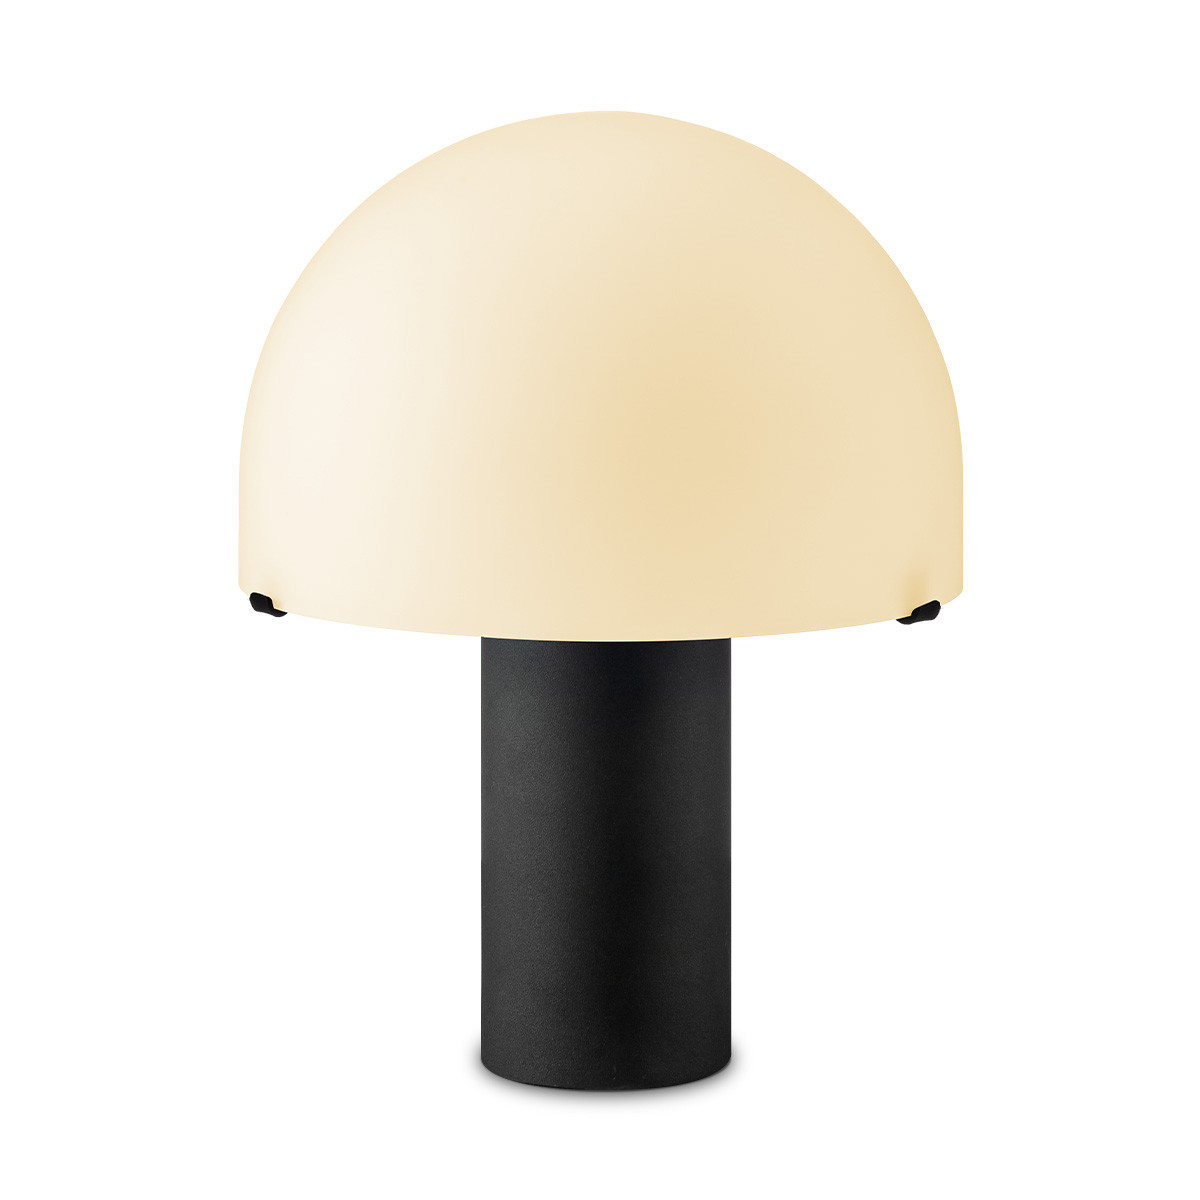 Light depot - tafellamp Mushroom metaal/glas - Outlet